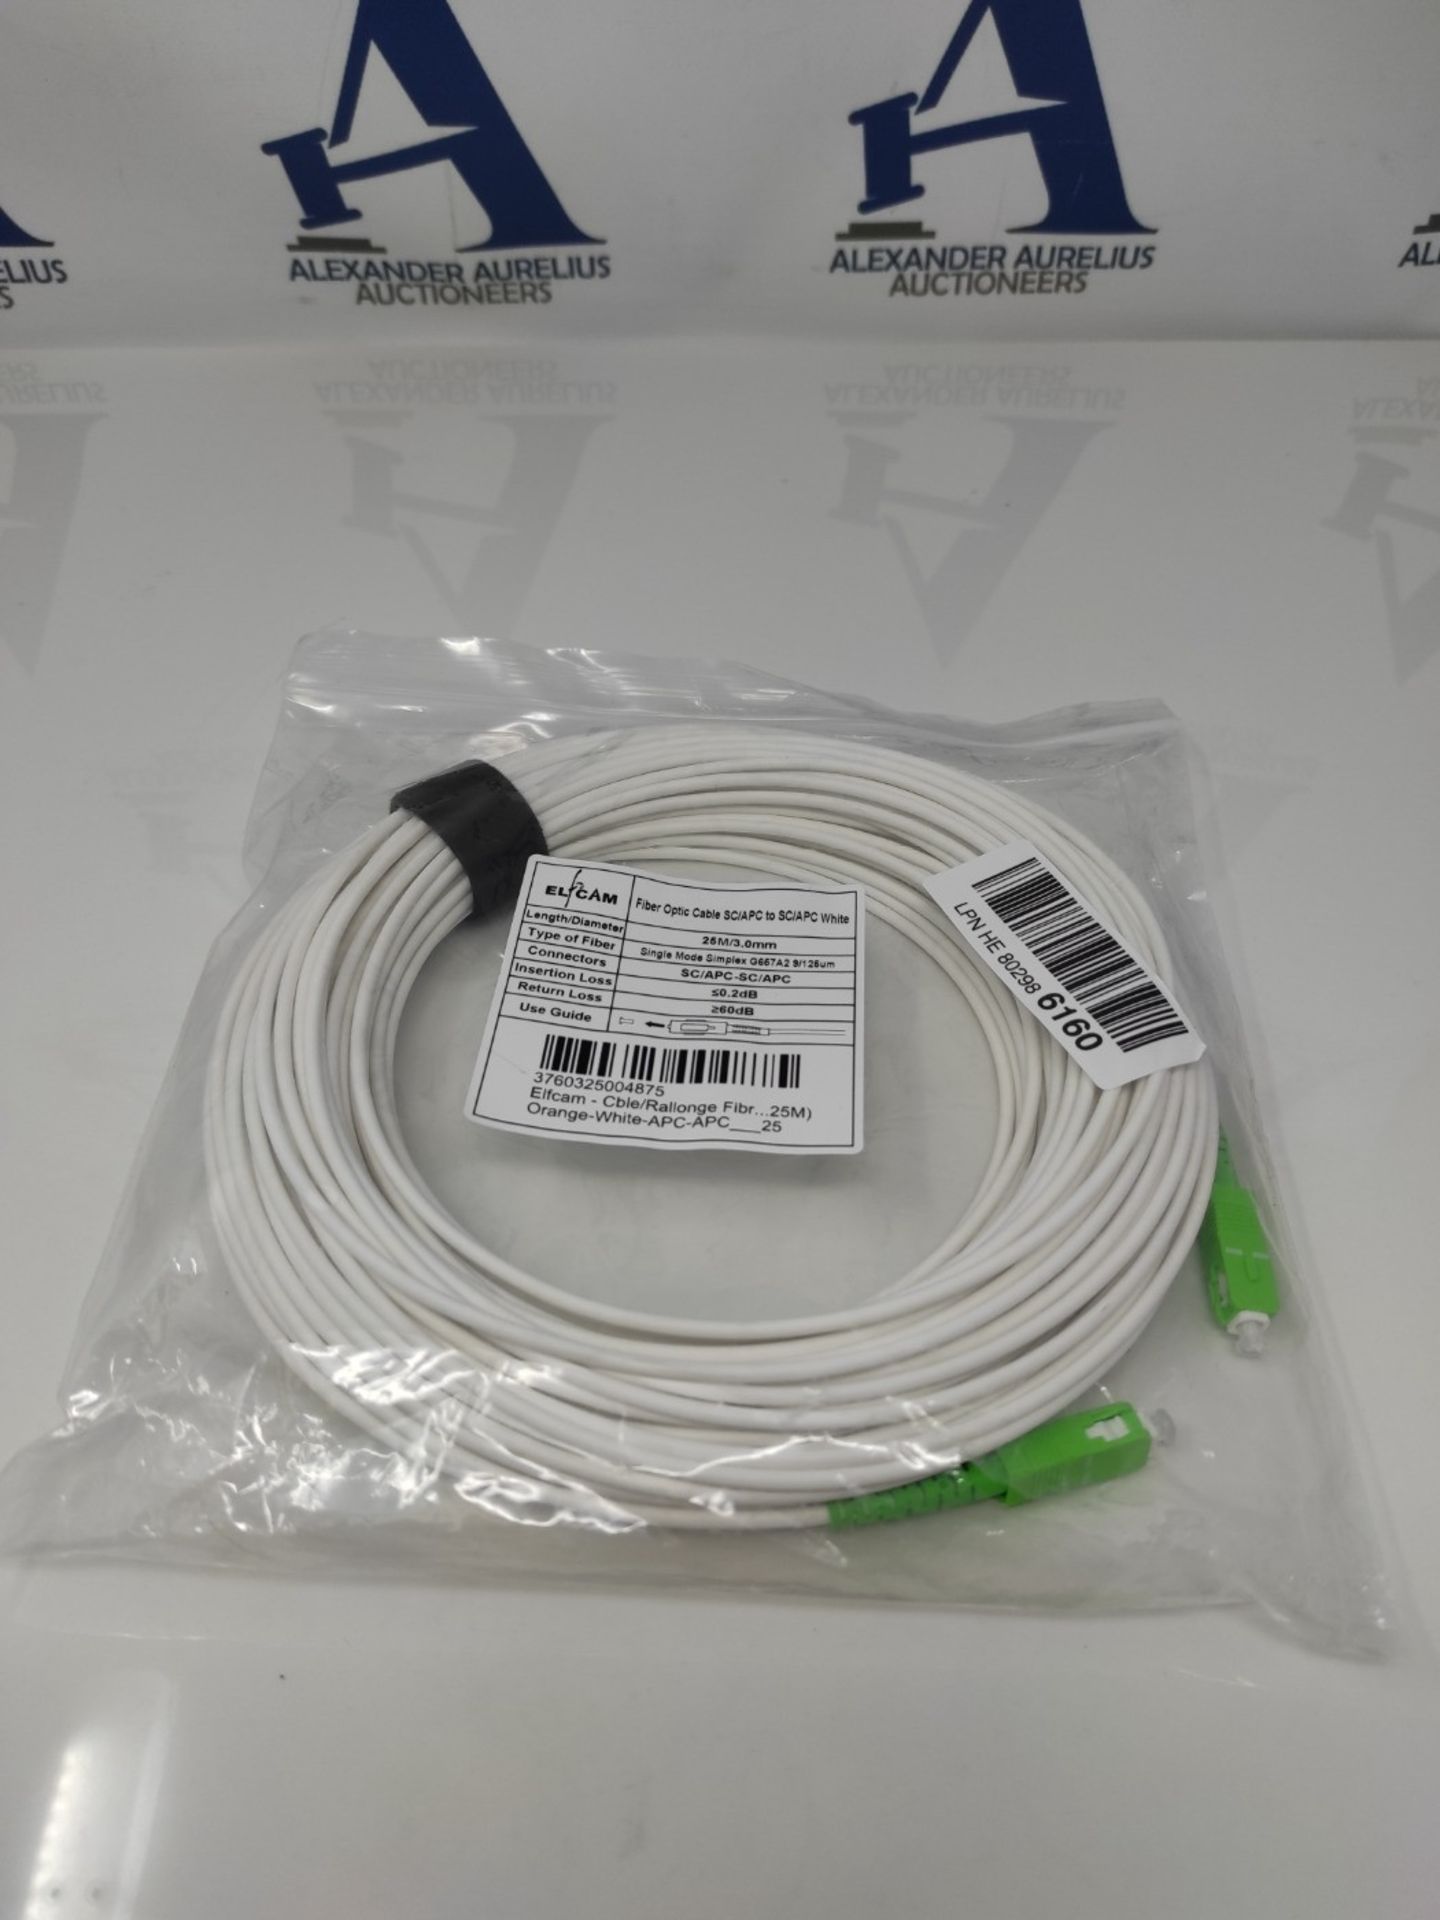 Elfcam - 25m Fiber Optic Cable for Orange Livebox, SFR Red Box and Bouygues Telecom Bb - Image 3 of 3